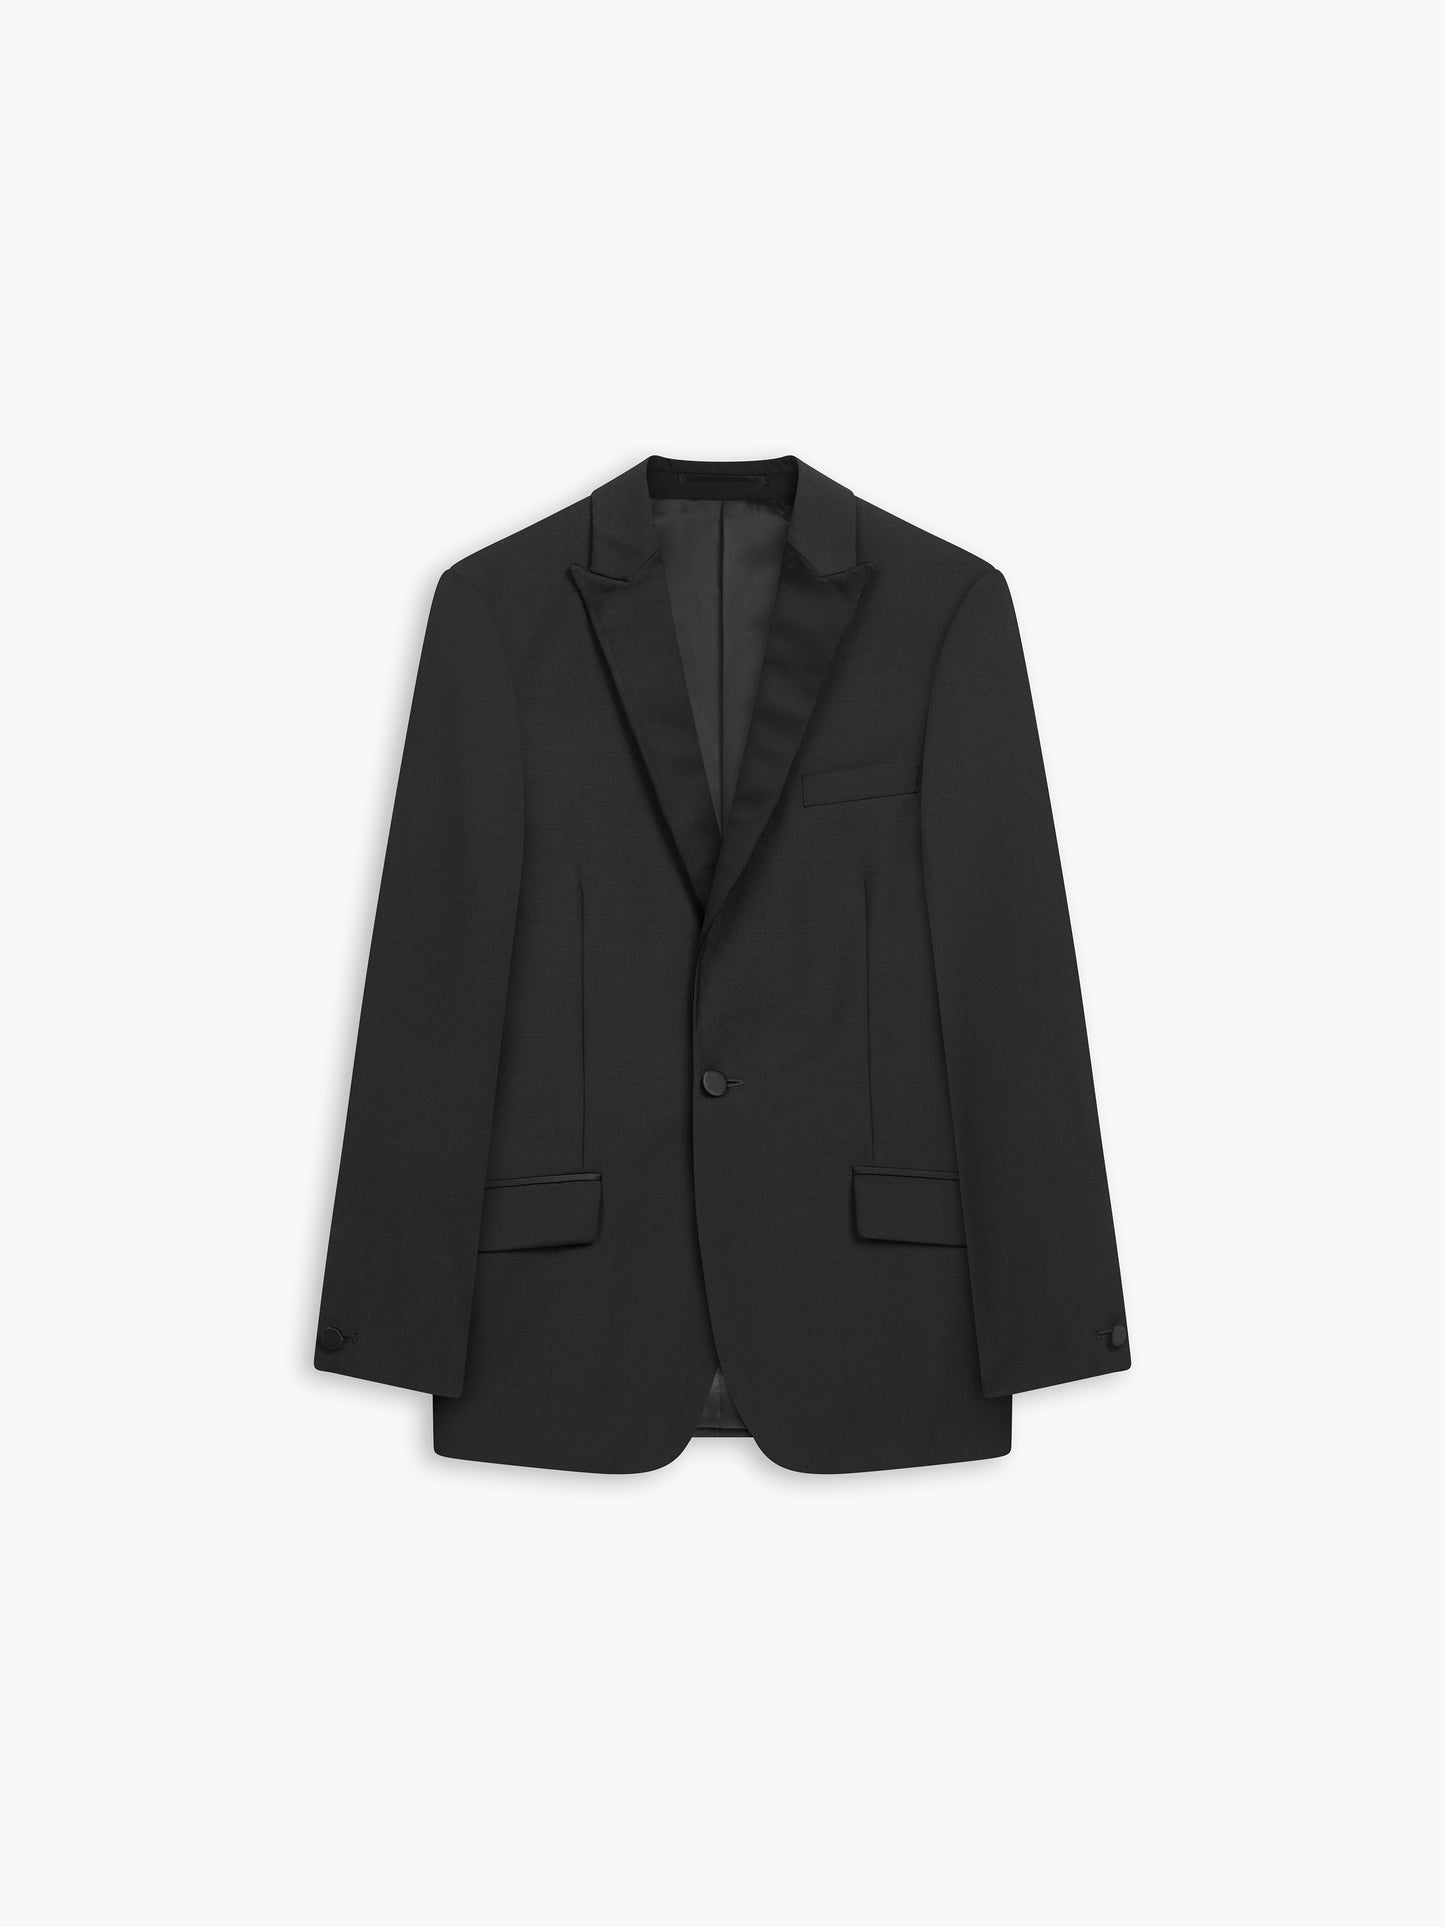 Nicholas Plain Black Jacket